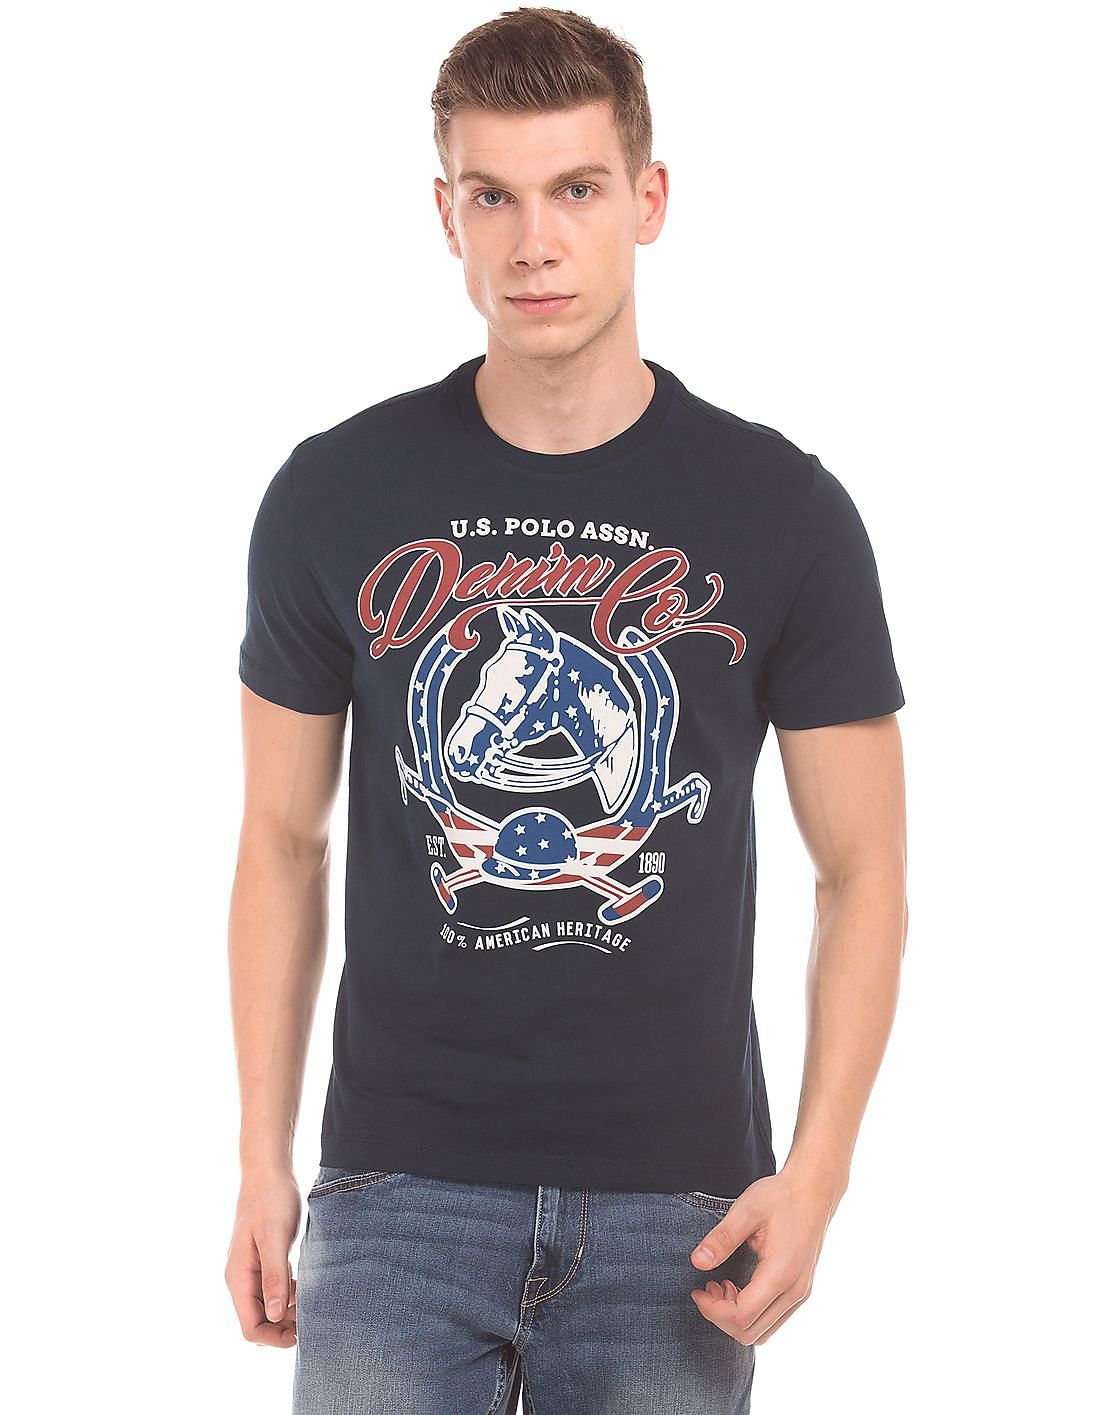 Buy U.S. Polo Assn. Denim Co. Men Brand Print Crew Neck T-Shirt - NNNOW.com